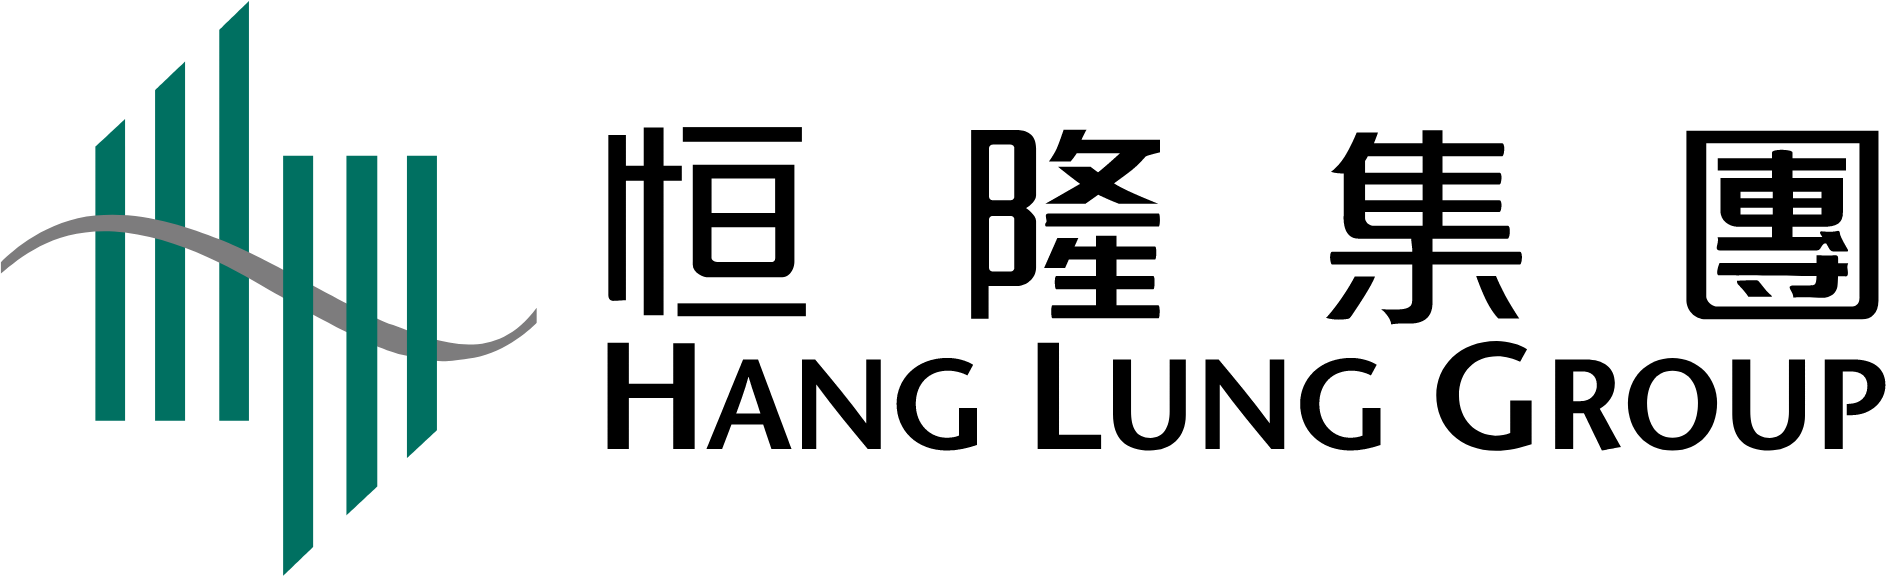 Hang Lung Group logo large (transparent PNG)